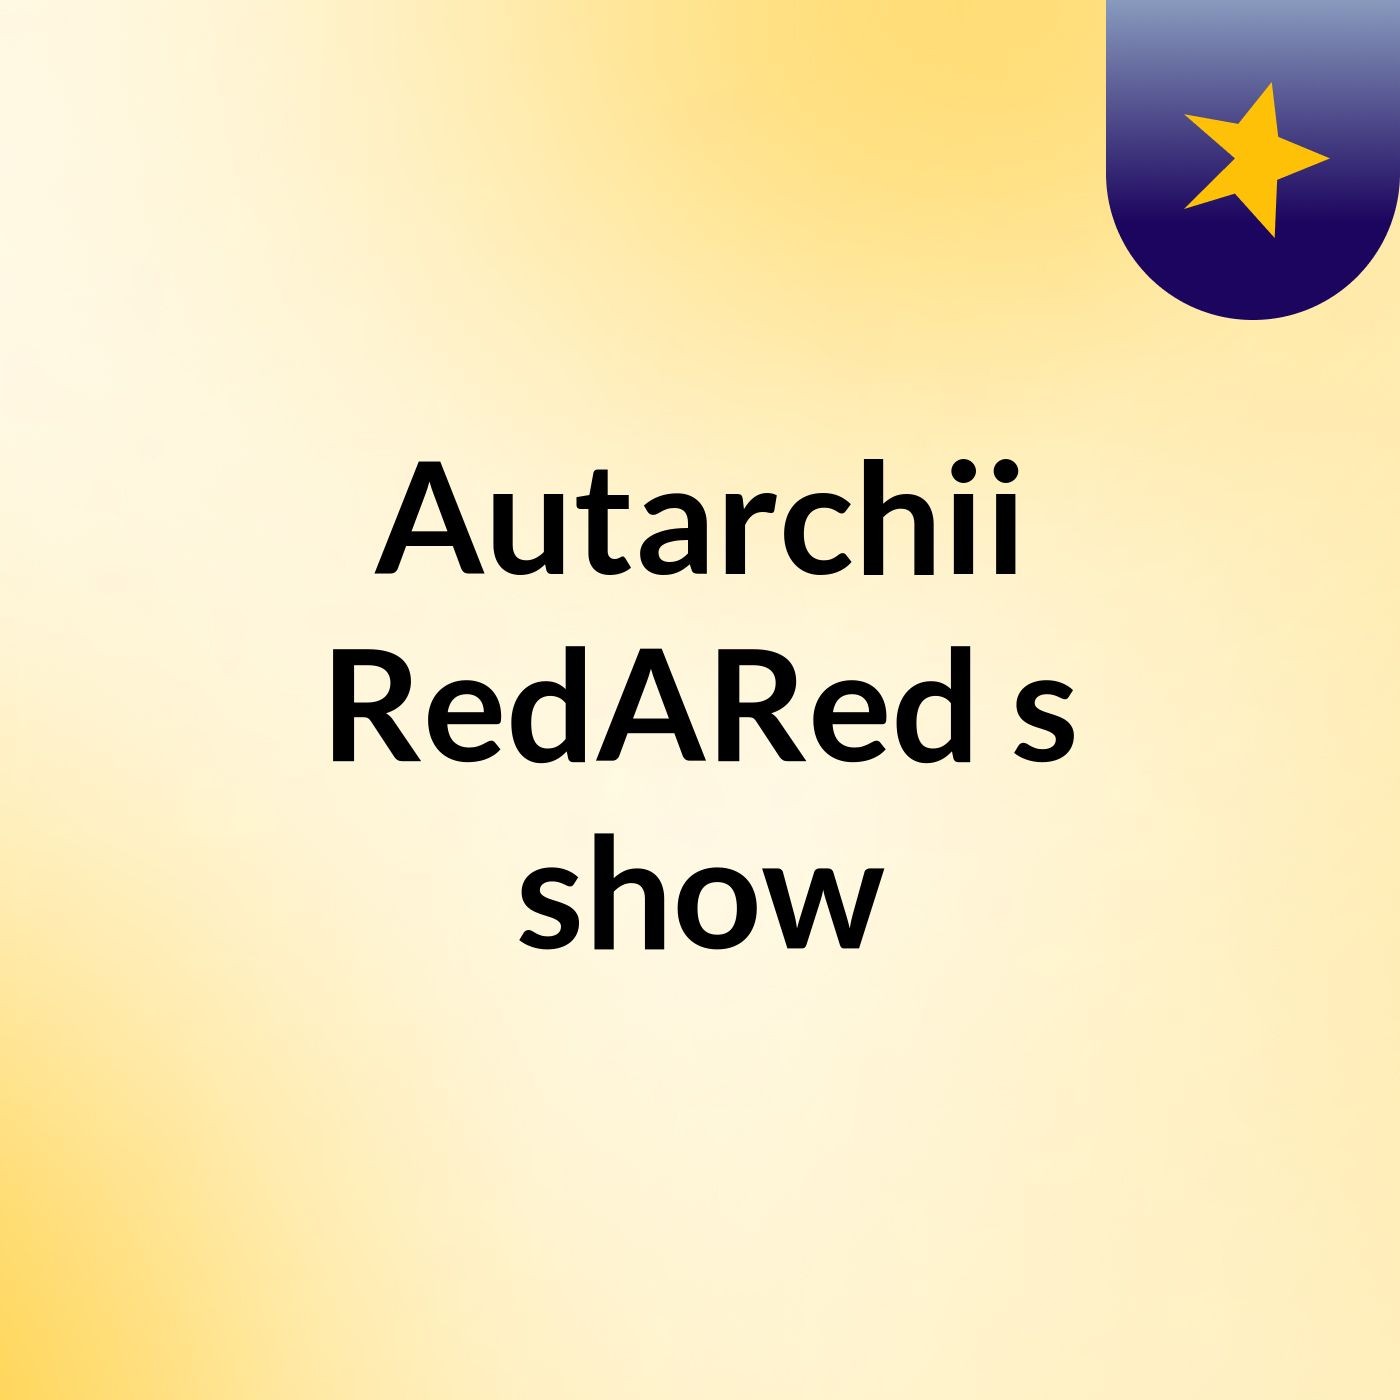 Episode 3 - Autarchii RedARed's show